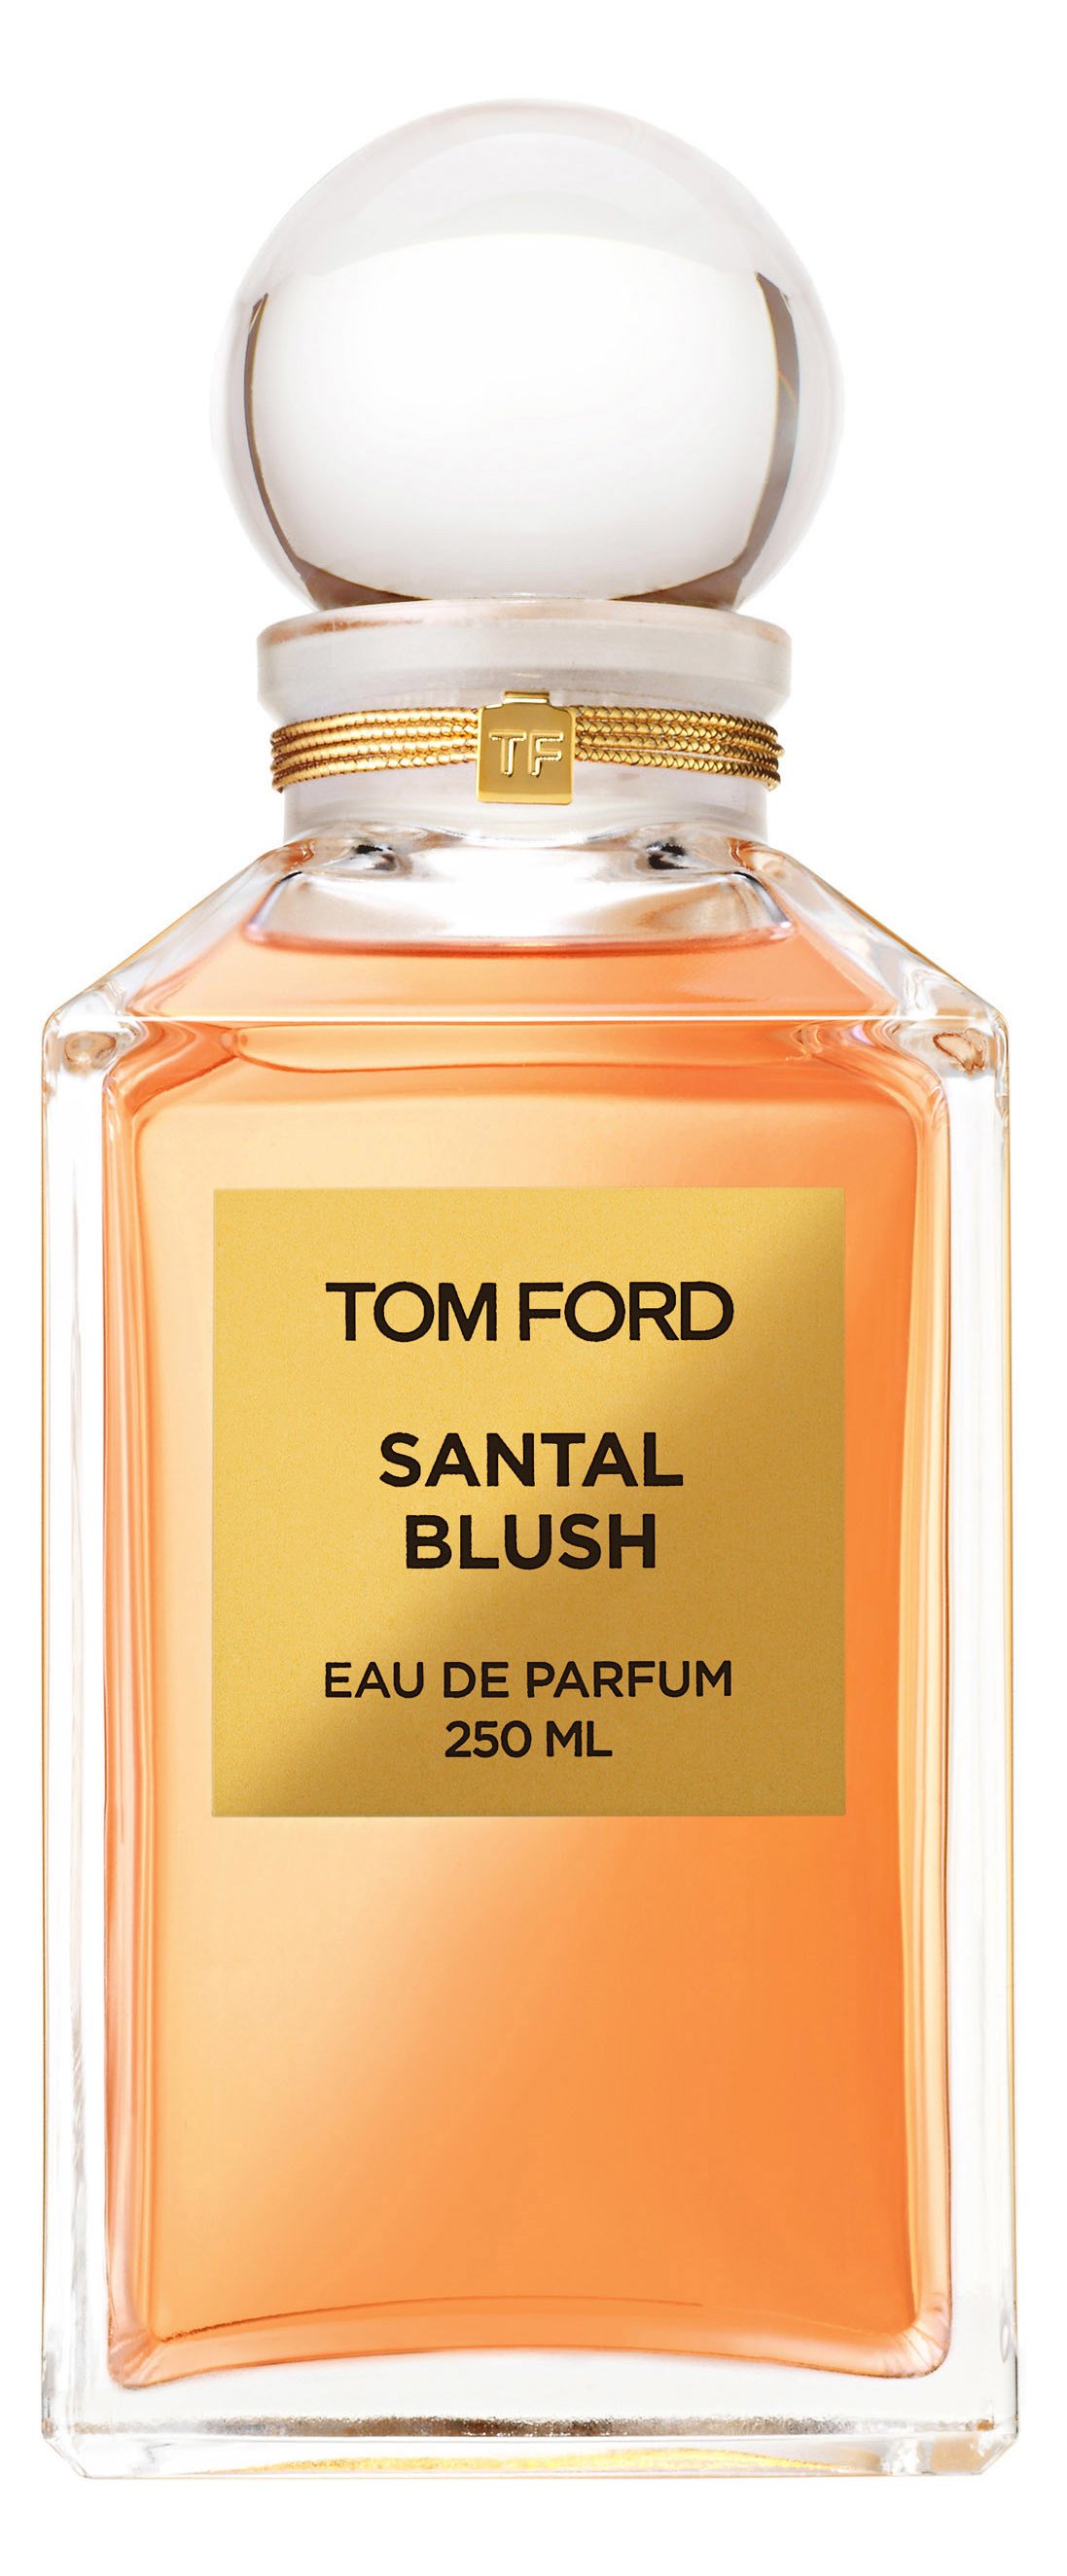 Santal Blush by Tom Ford » Reviews & Perfume Facts